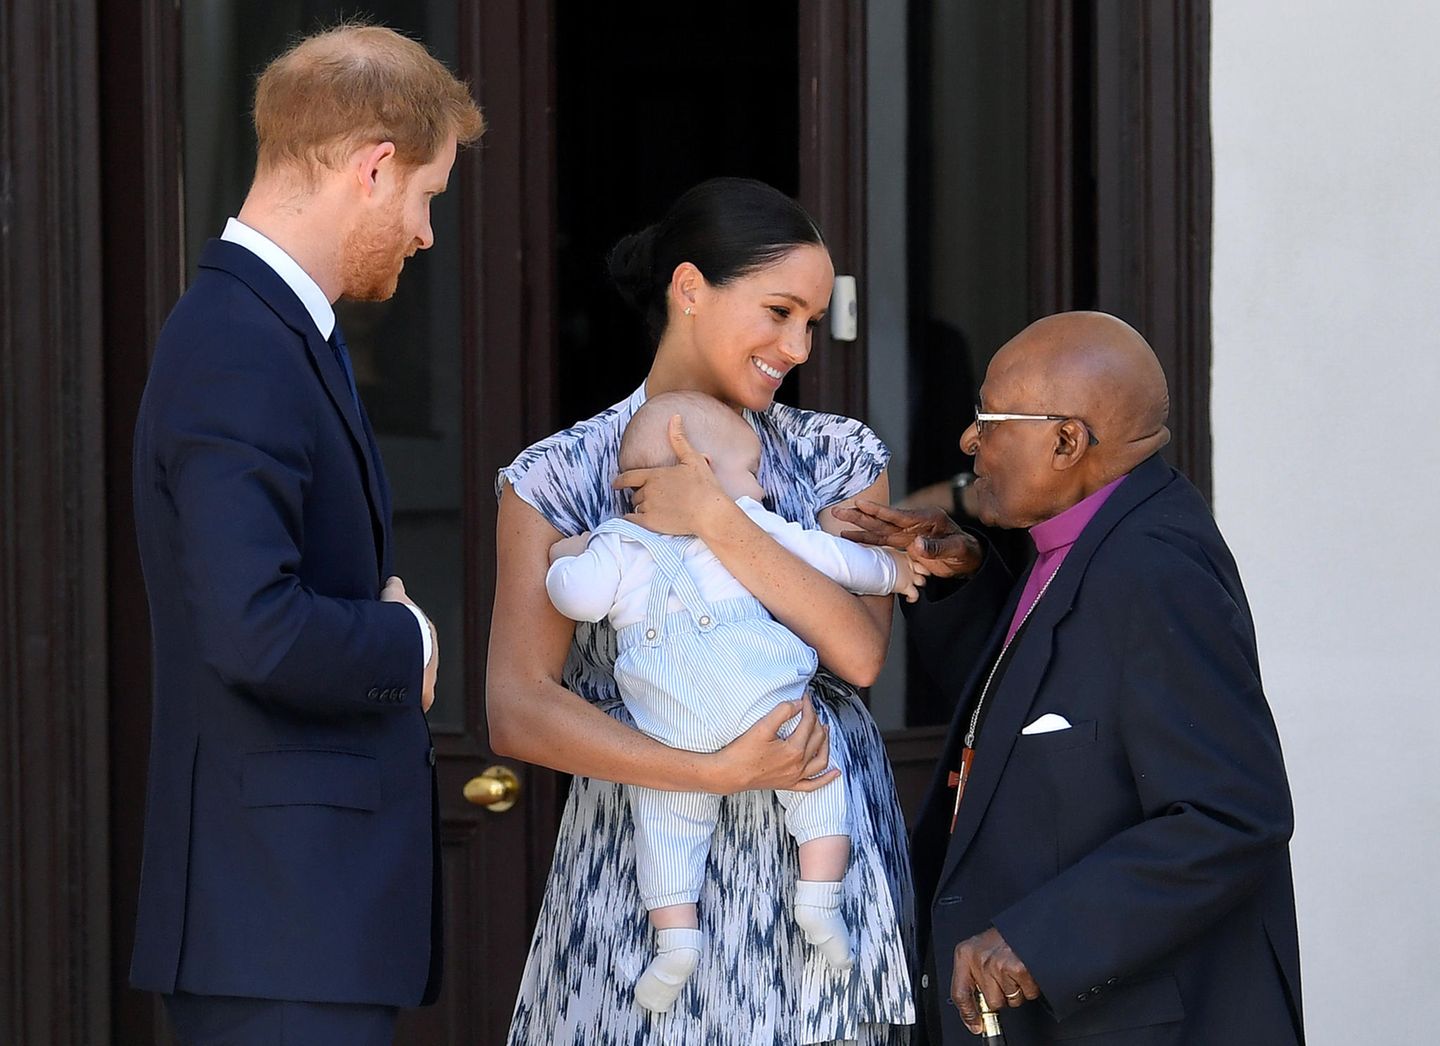 Herzogin Meghan + Prinz Harry in Afrika: Meghan Markle und Prinz Harry mit Baby Archie